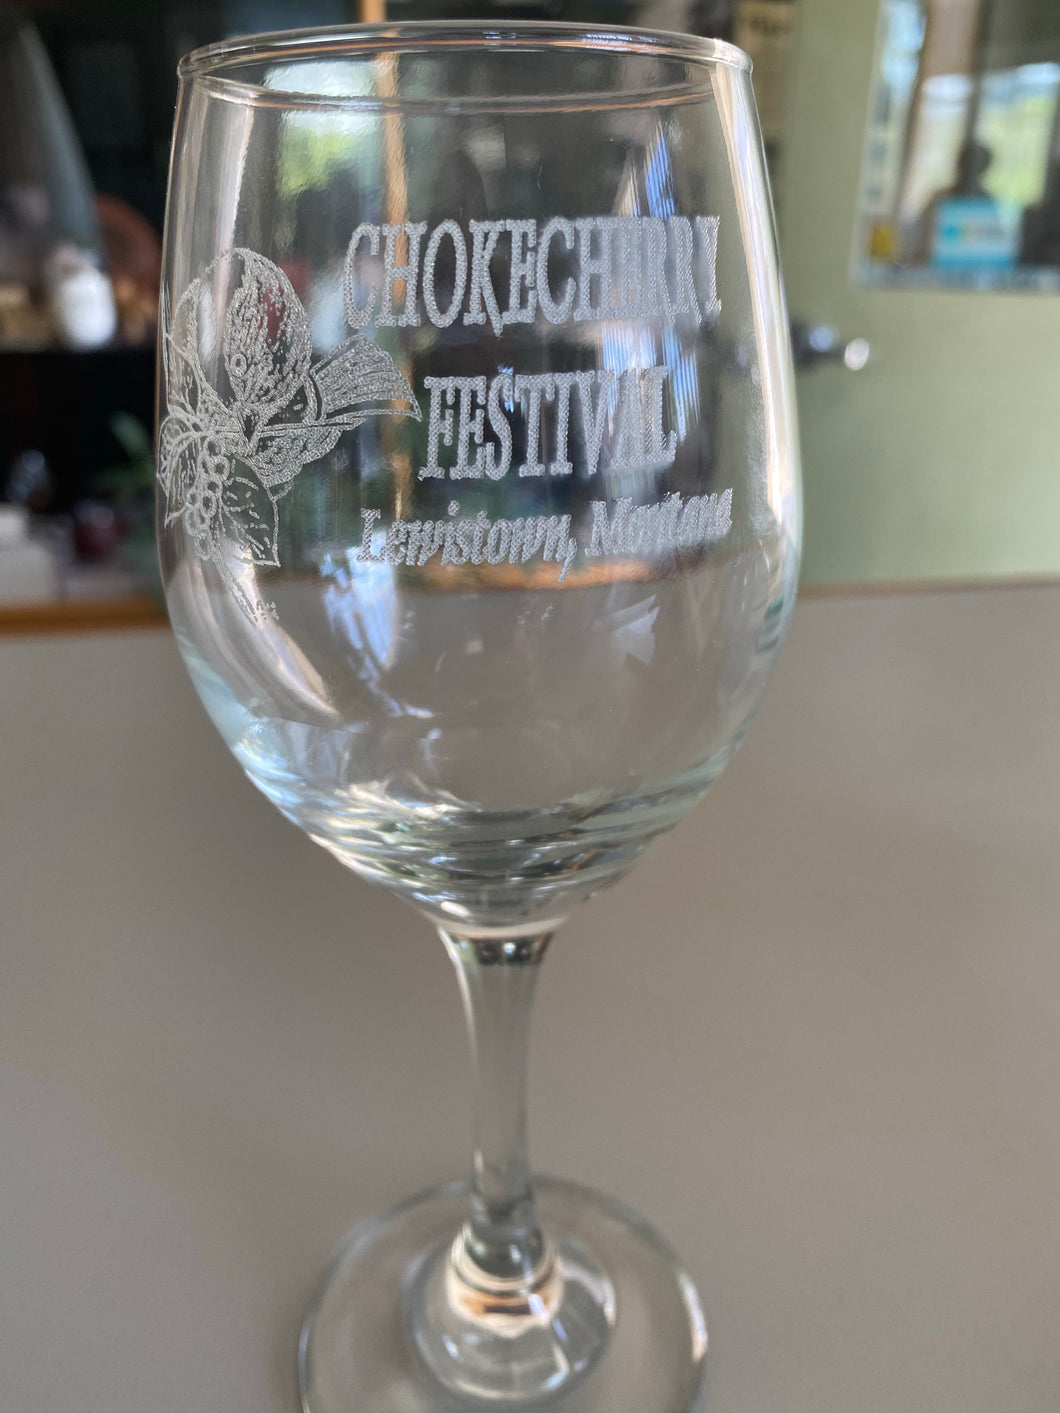 Chokecherry Festival Wine Glass